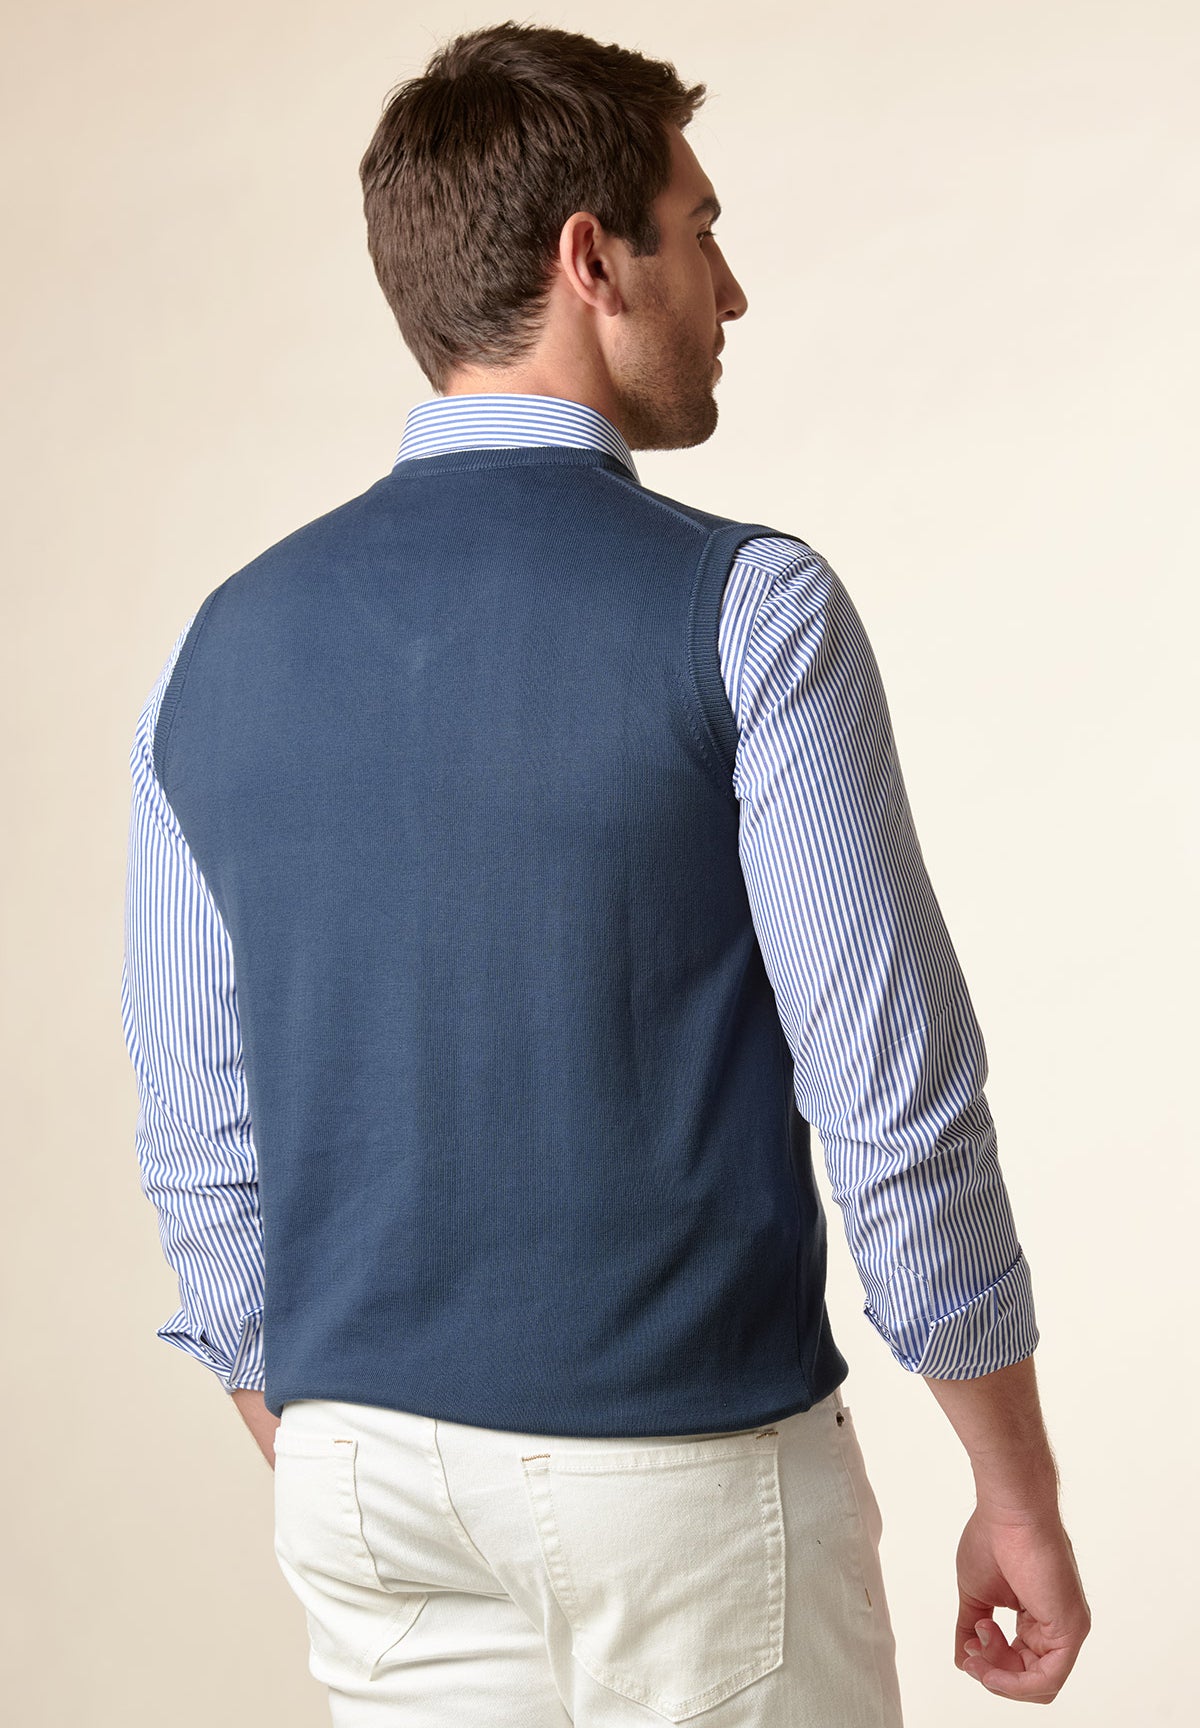 Blue cotton v-neck vest